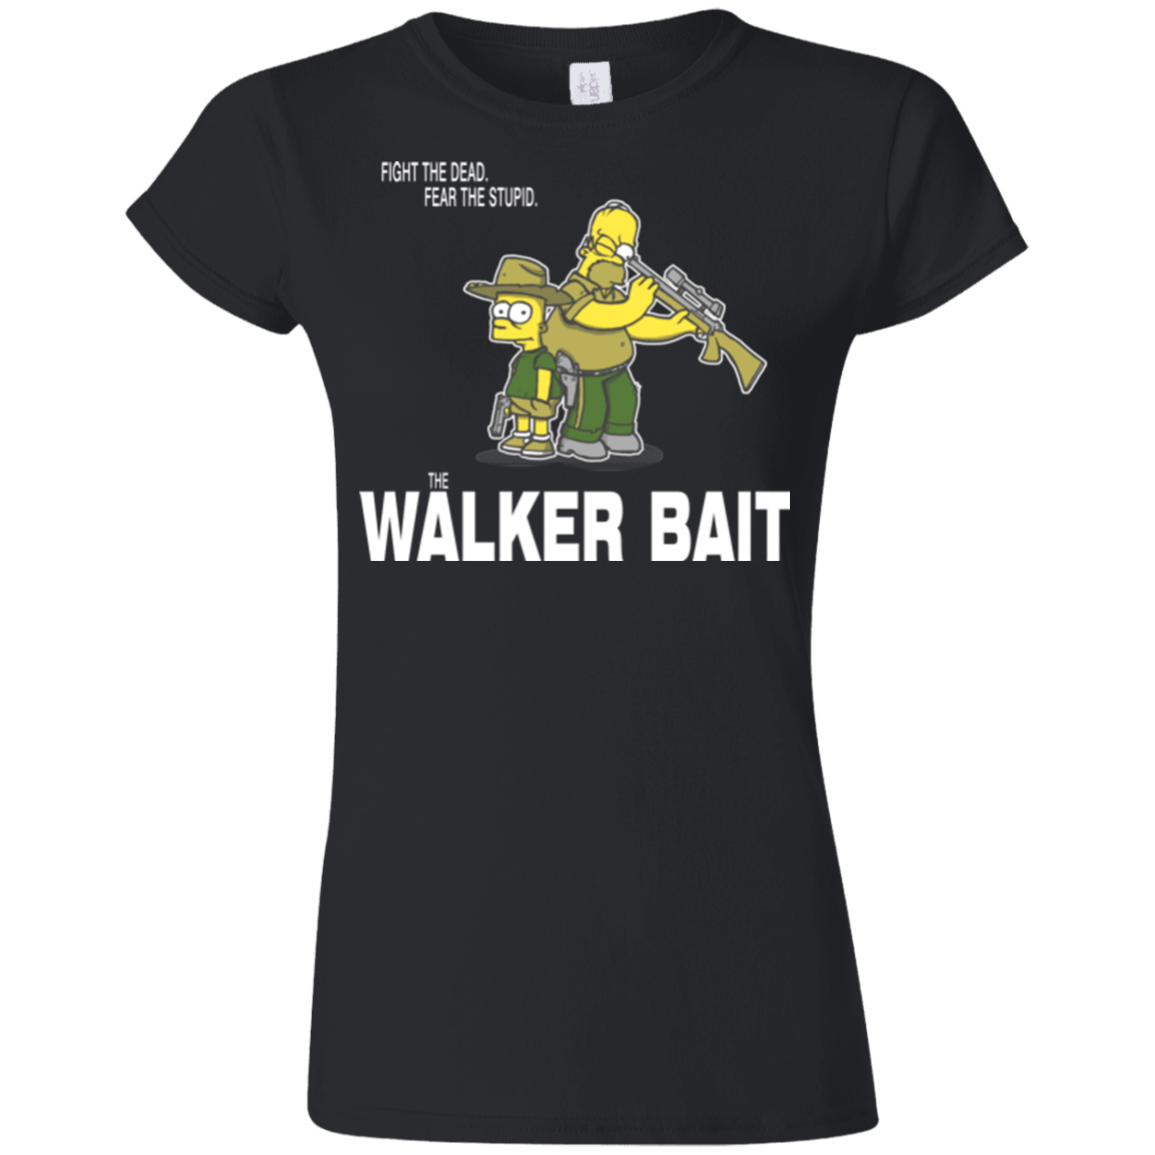 The Walker Bait Junior Slimmer-Fit T-Shirt